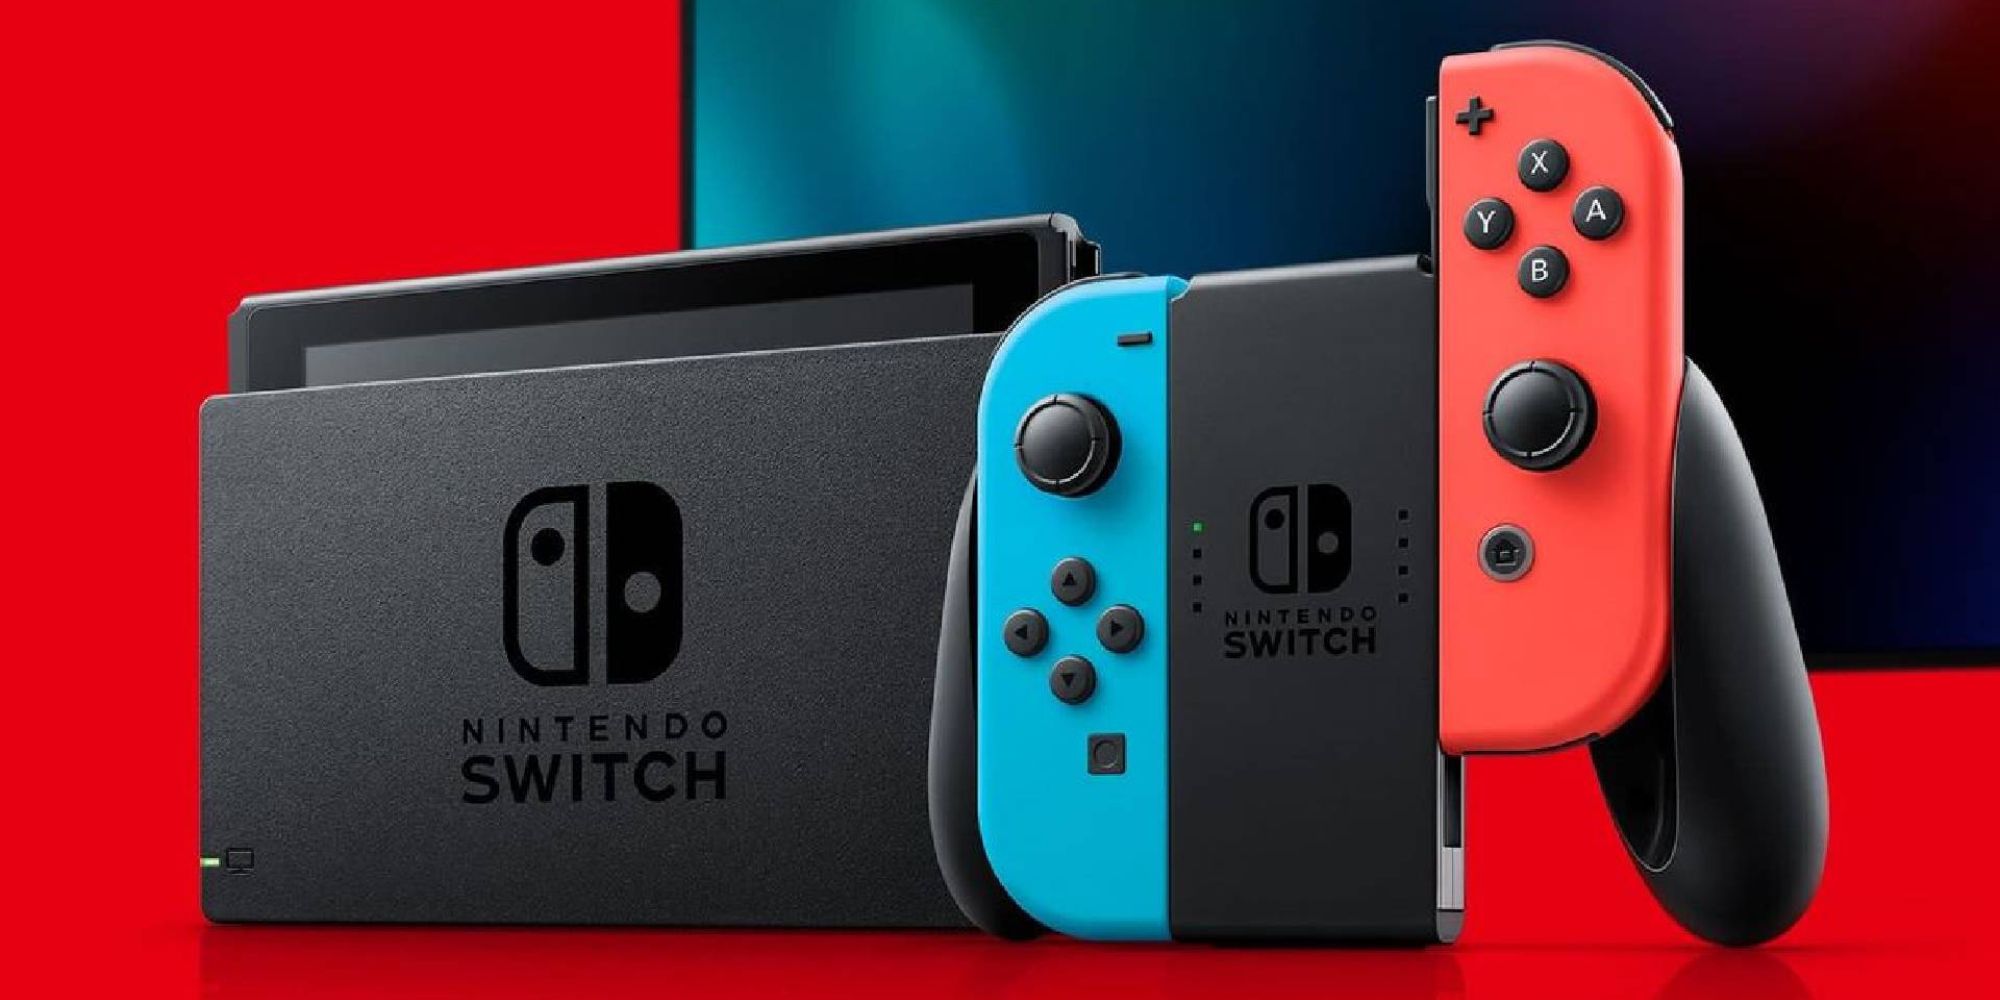 A standard Nintendo Switch